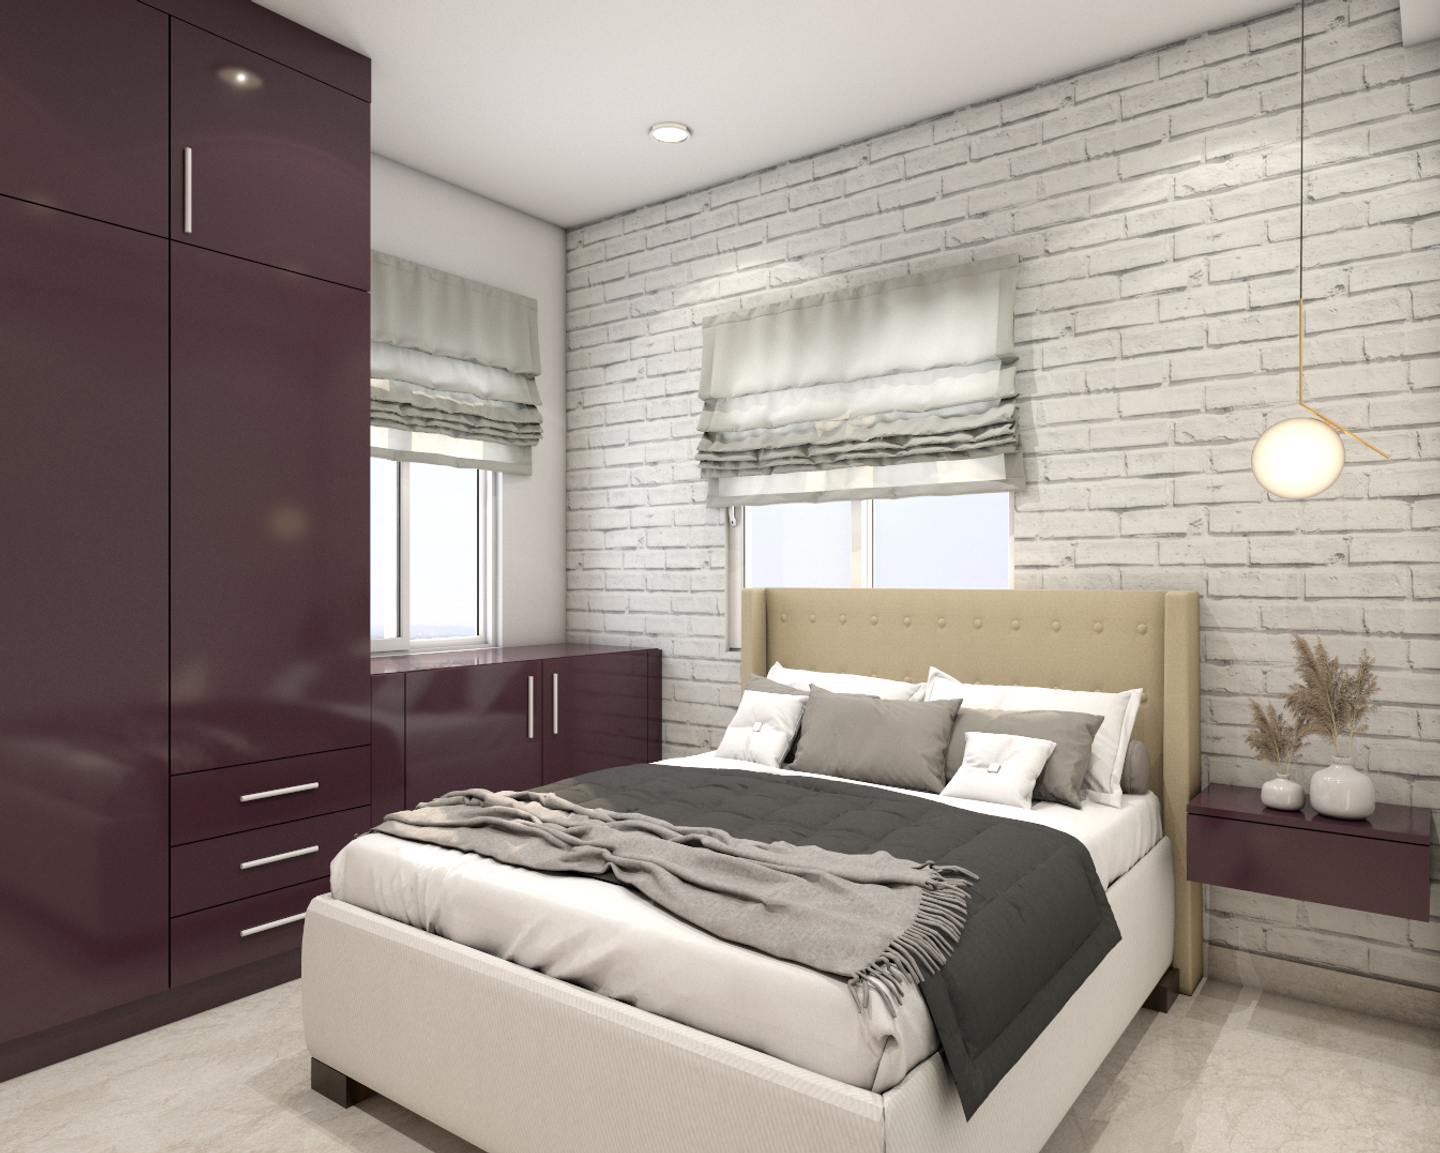 Guest Bedroom With Maximum Storage - Livspace